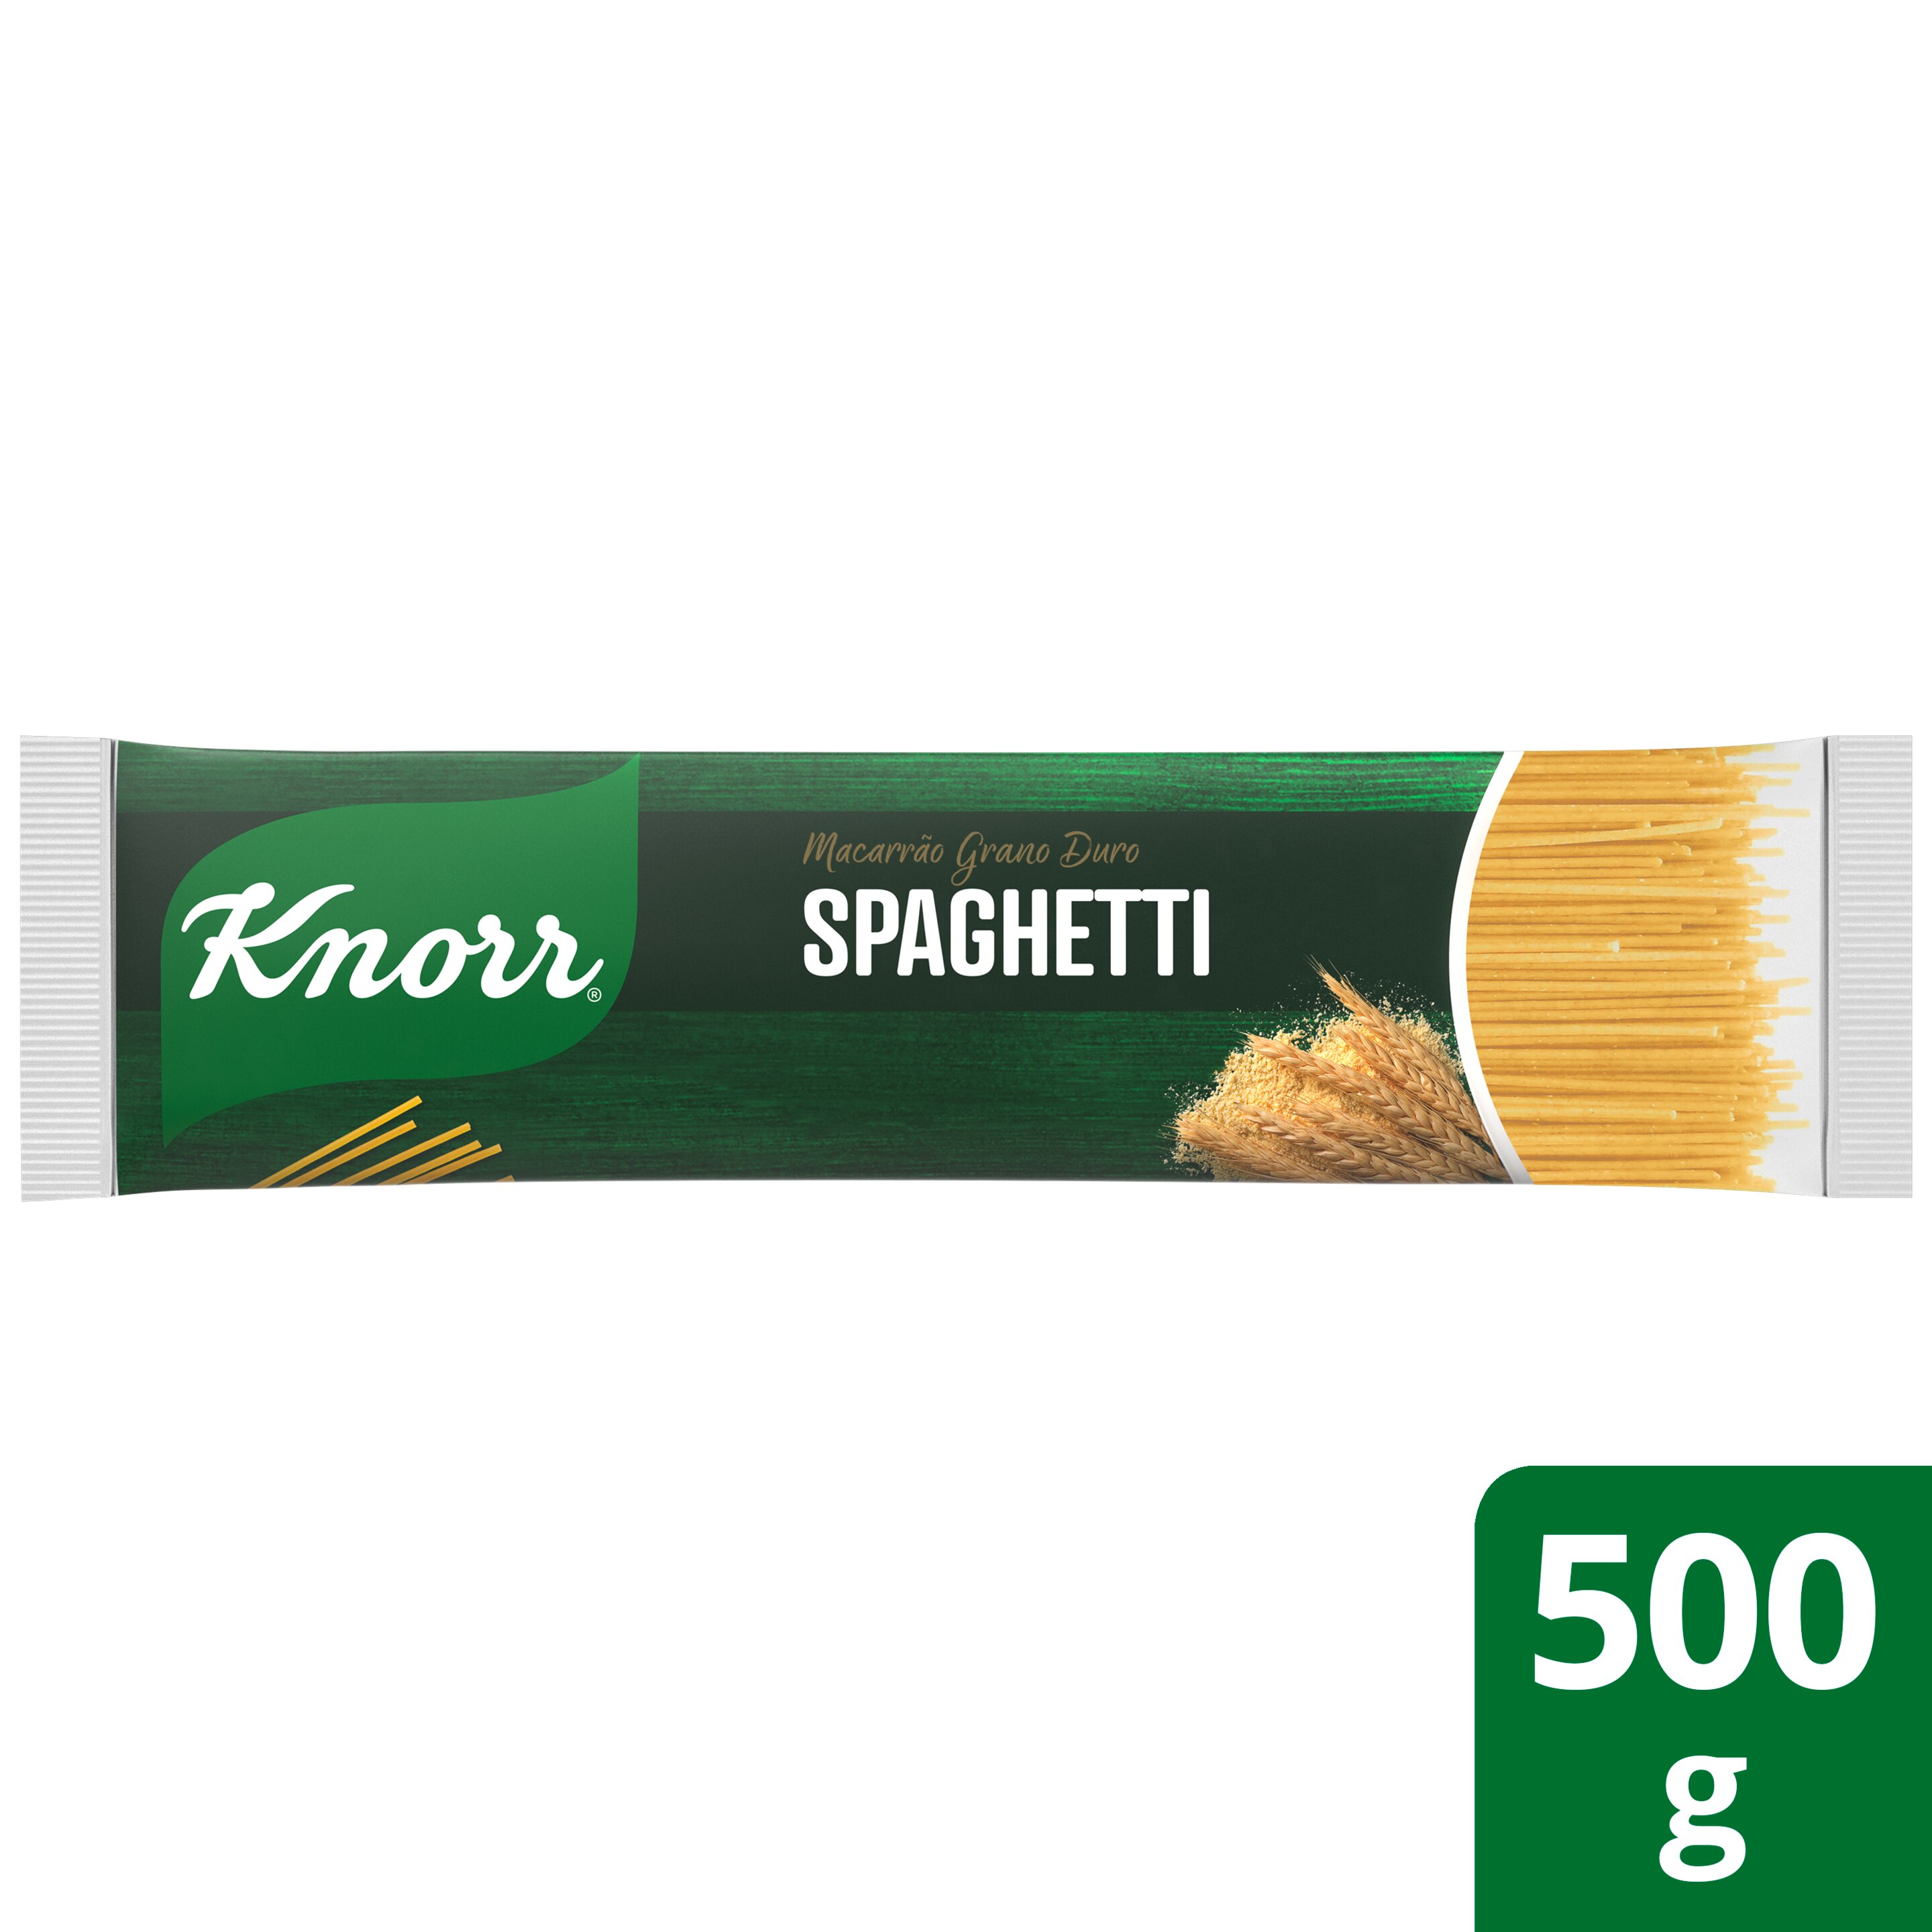 Macarrão Knorr Spaghetti Grano Duro